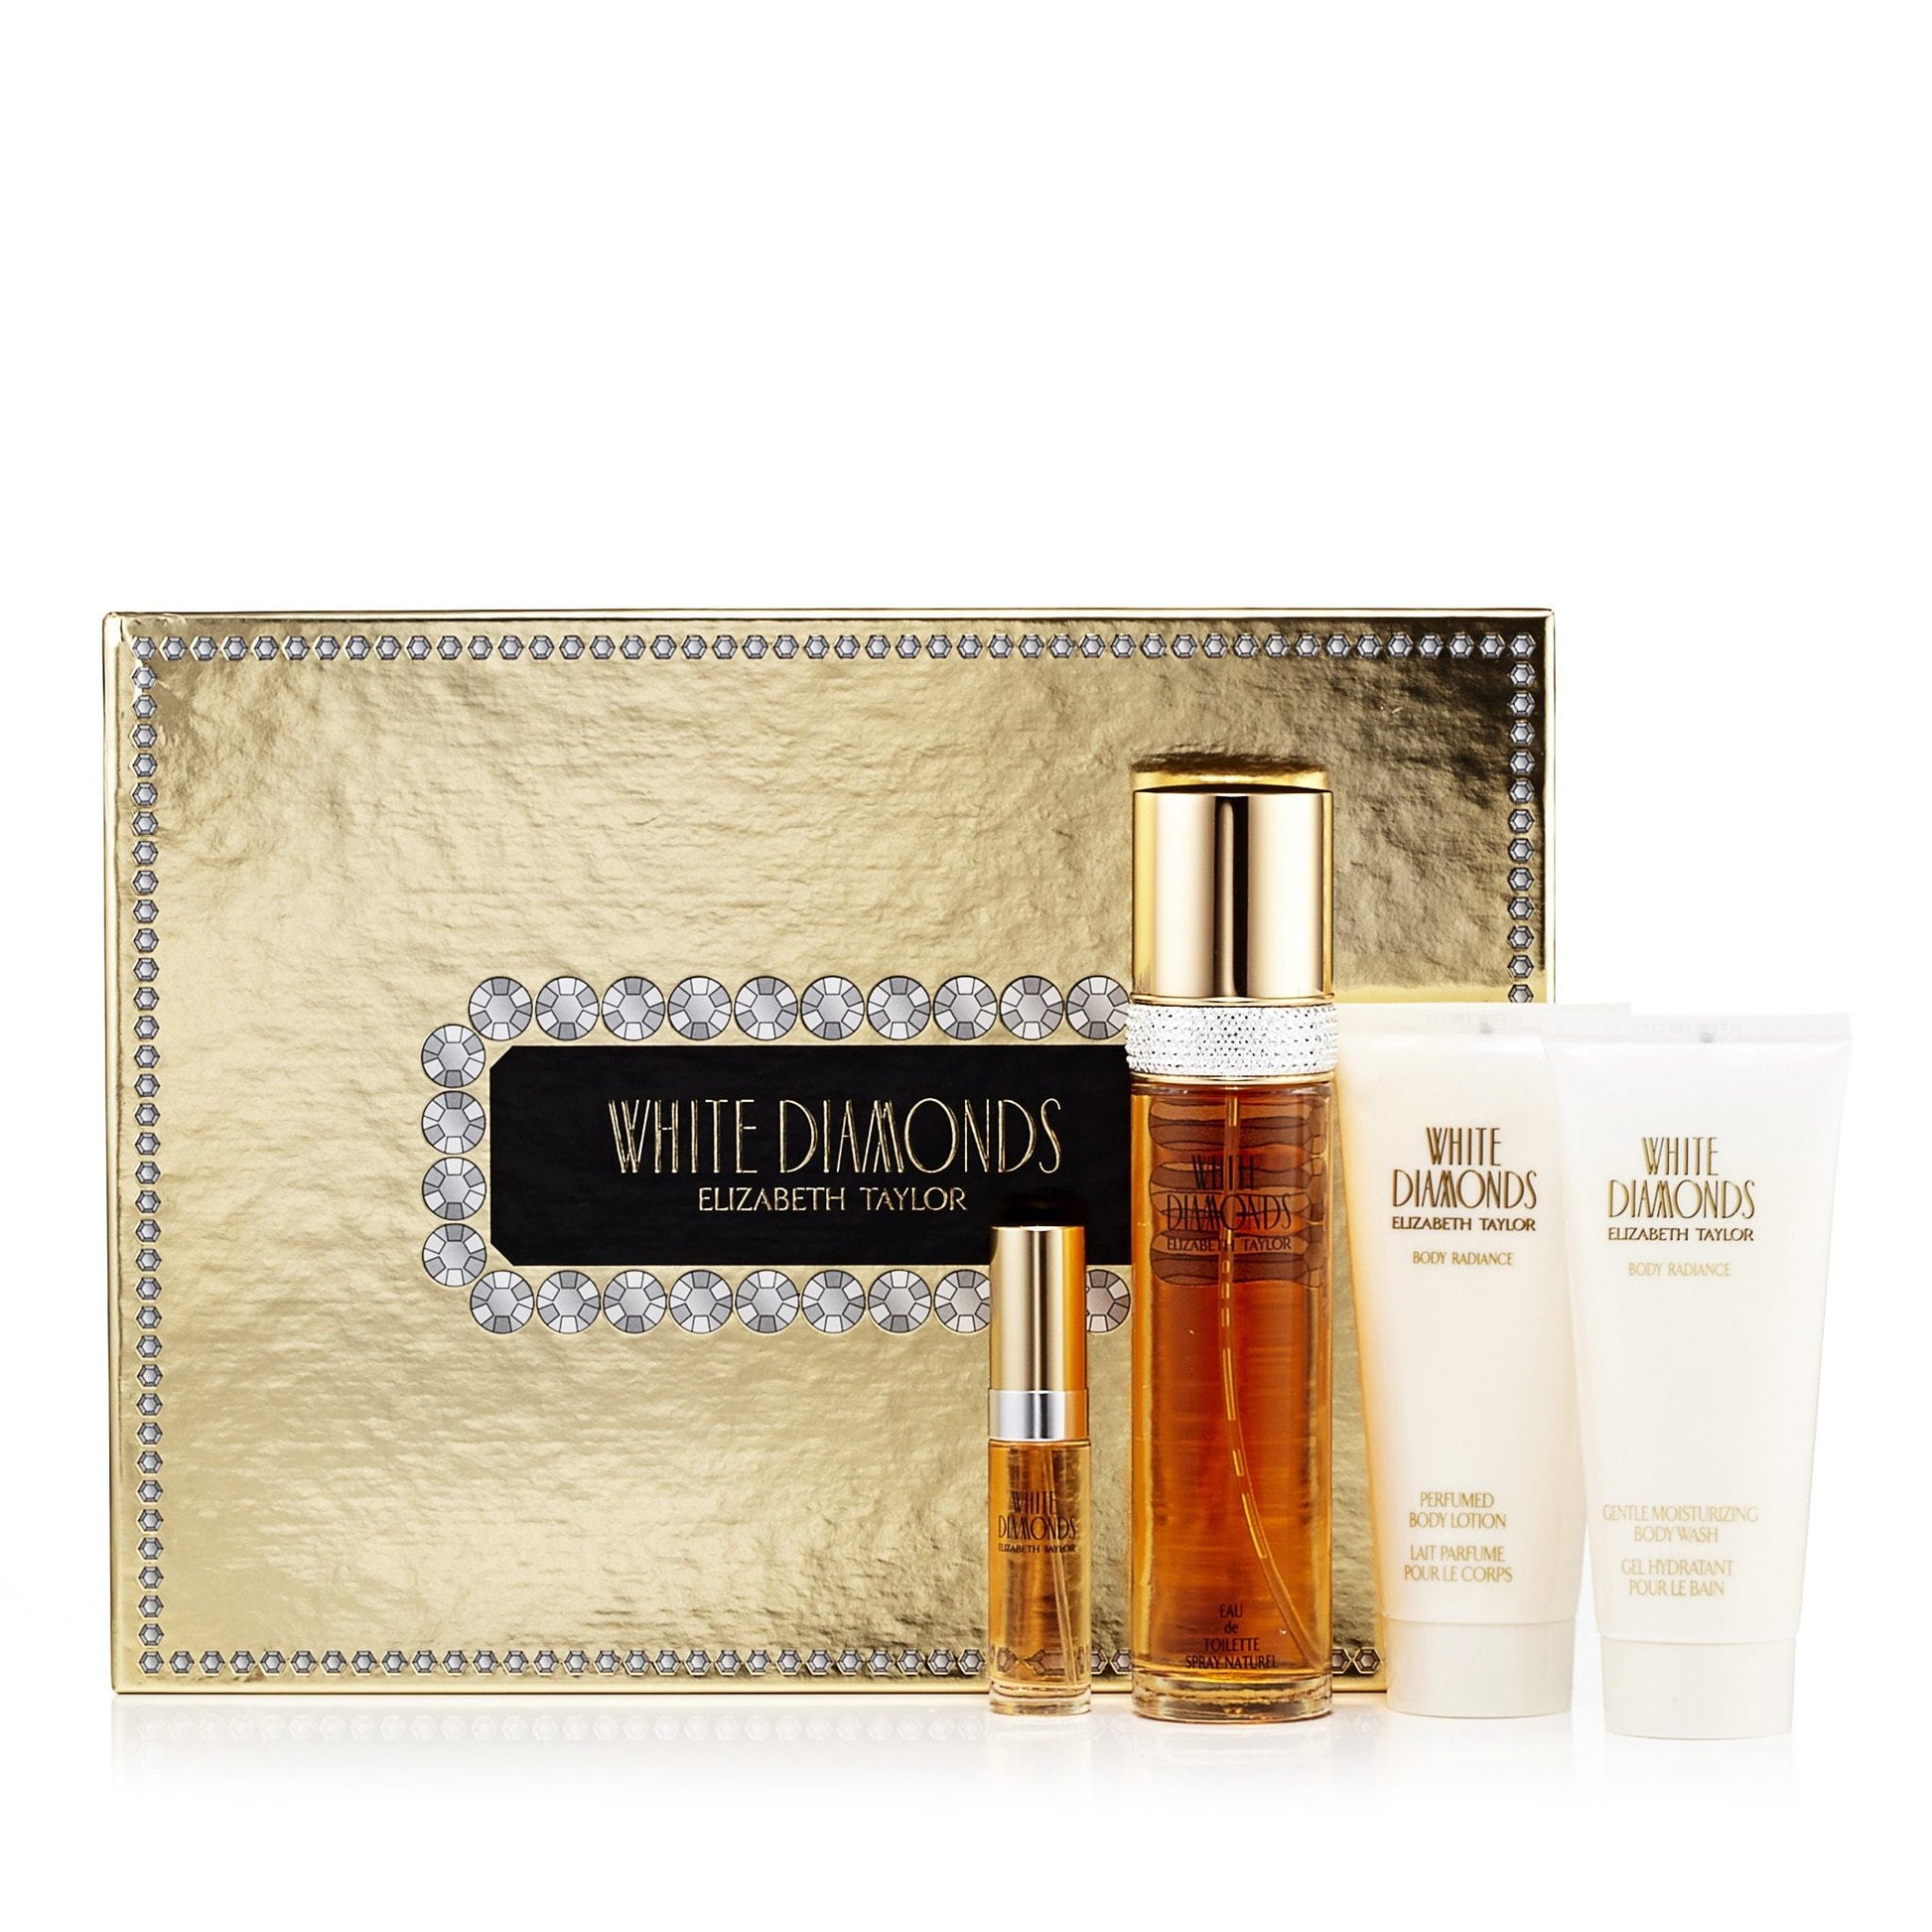 White Diamonds Gift Set Eau de Toilette, Body Lotion and Shower Gel for Women by Elizabeth Taylor, Product image 2